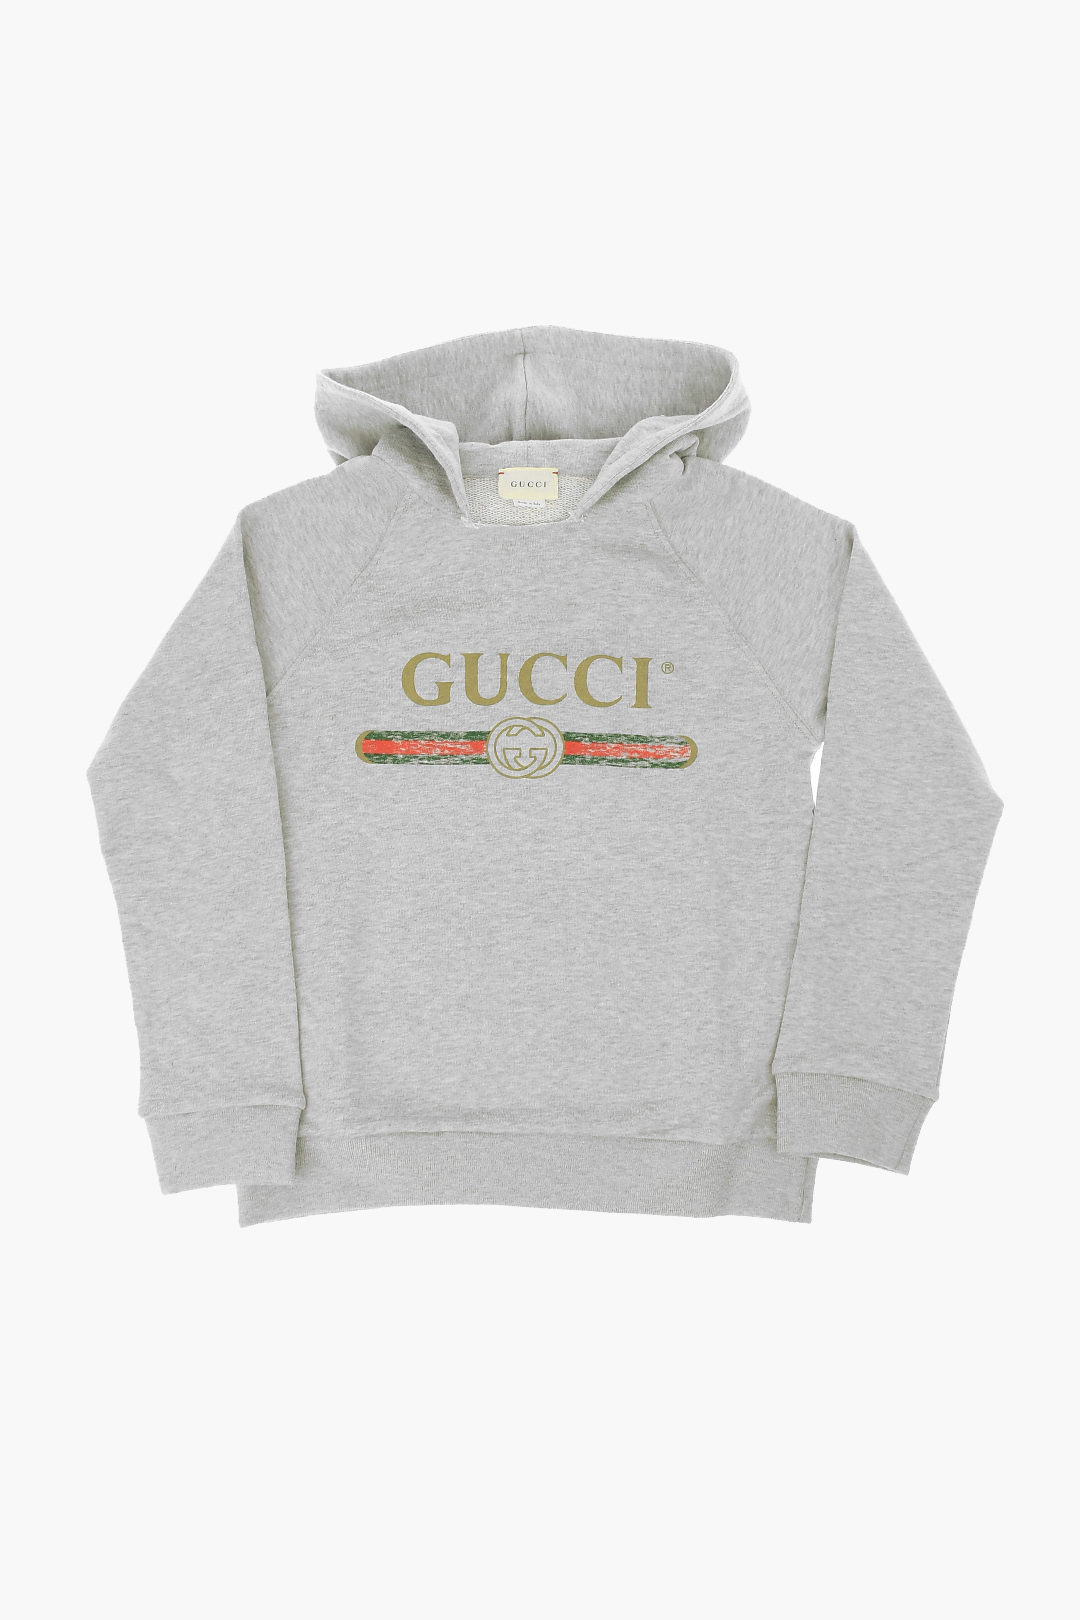 Gucci Kids Printed Hoodie Sweatshirt unisex children boys girls - Glamood  Outlet